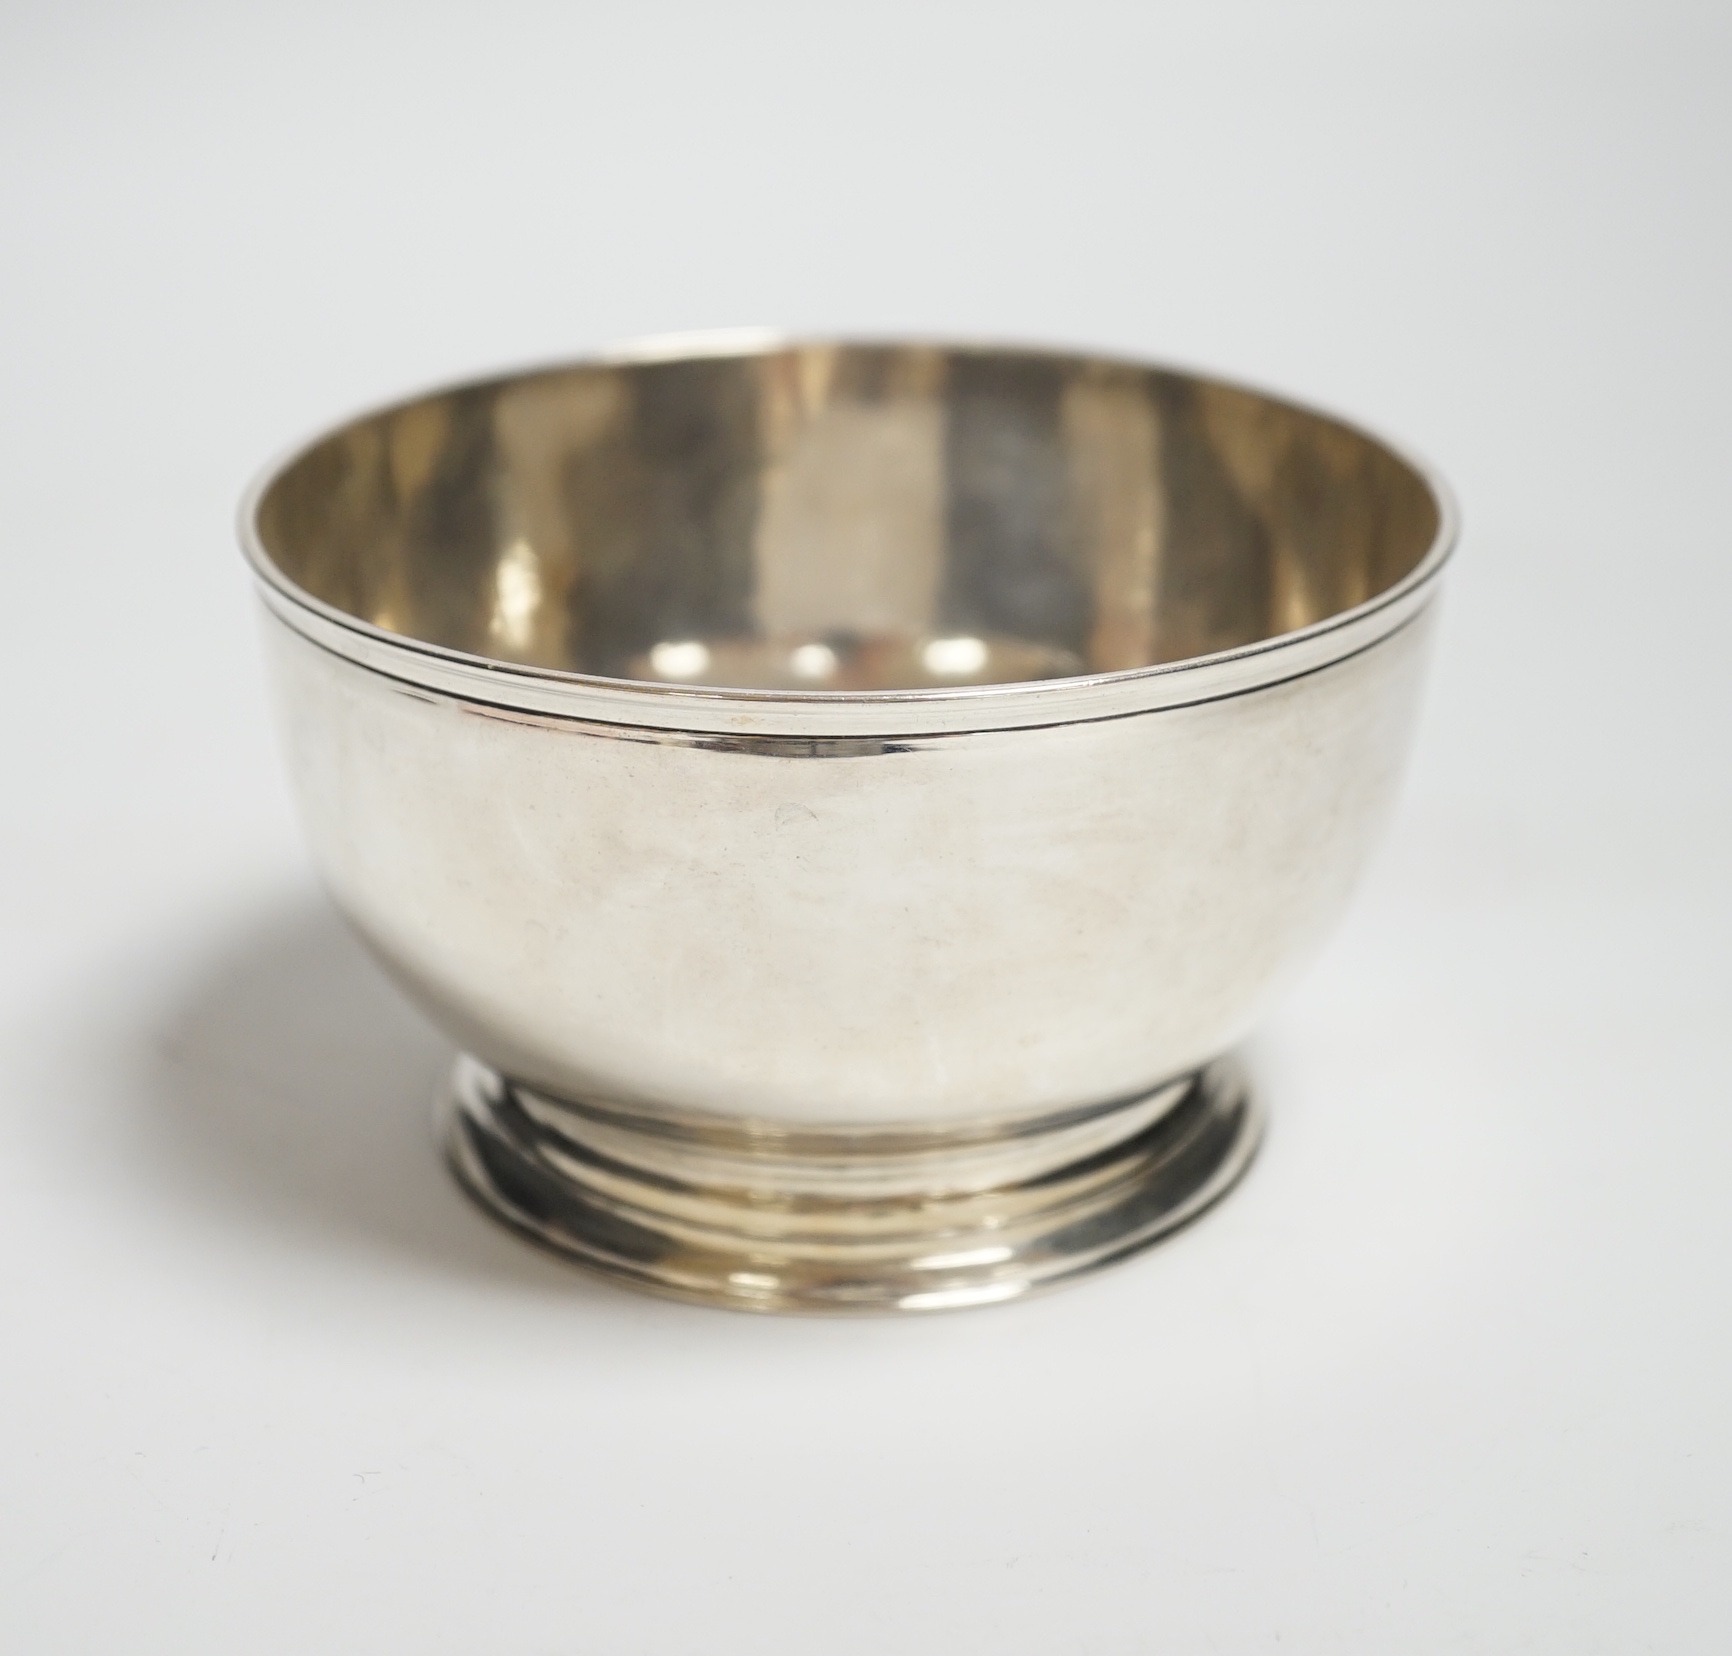 An early George III silver bowl, London, 1761, diameter 10cm, 6.2oz.